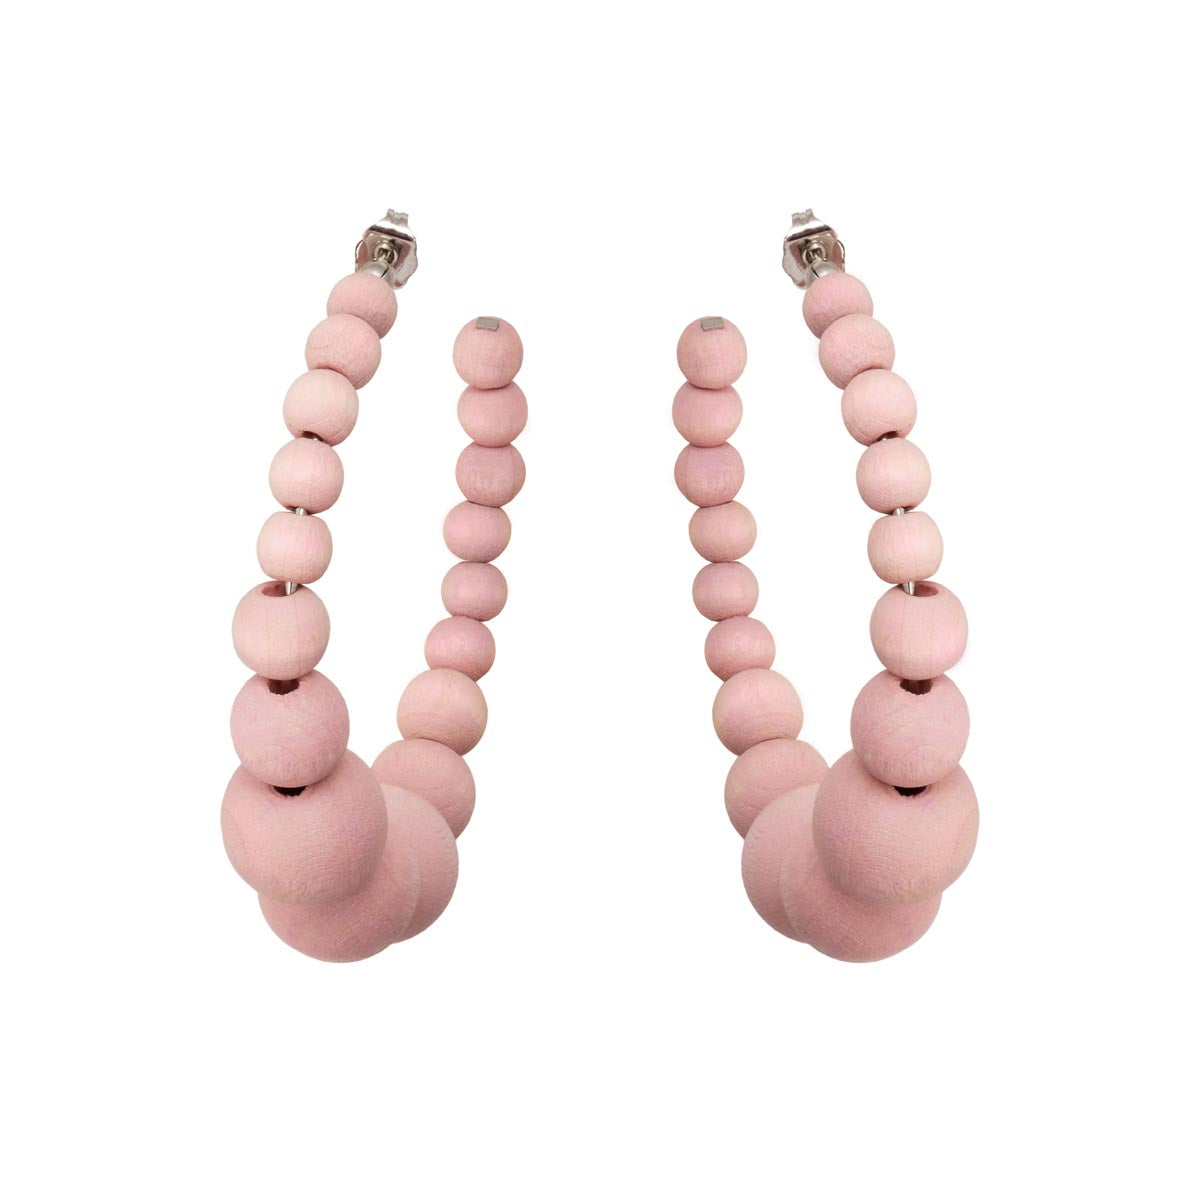 Angervo earrings, pink